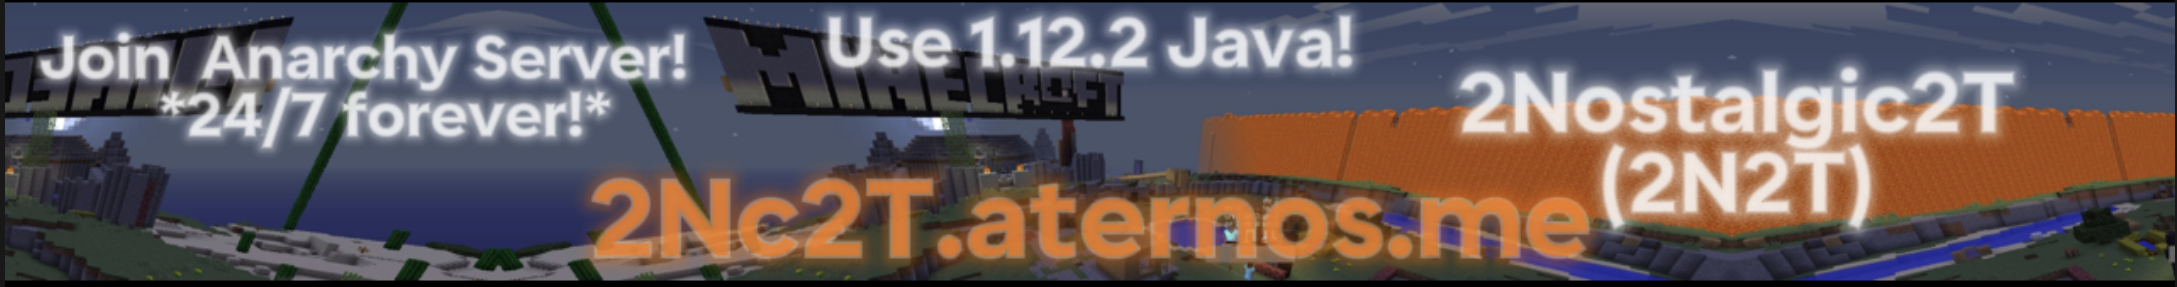 Banner for 2Nostalgic2T (2N2T) Anarchy Minecraft server